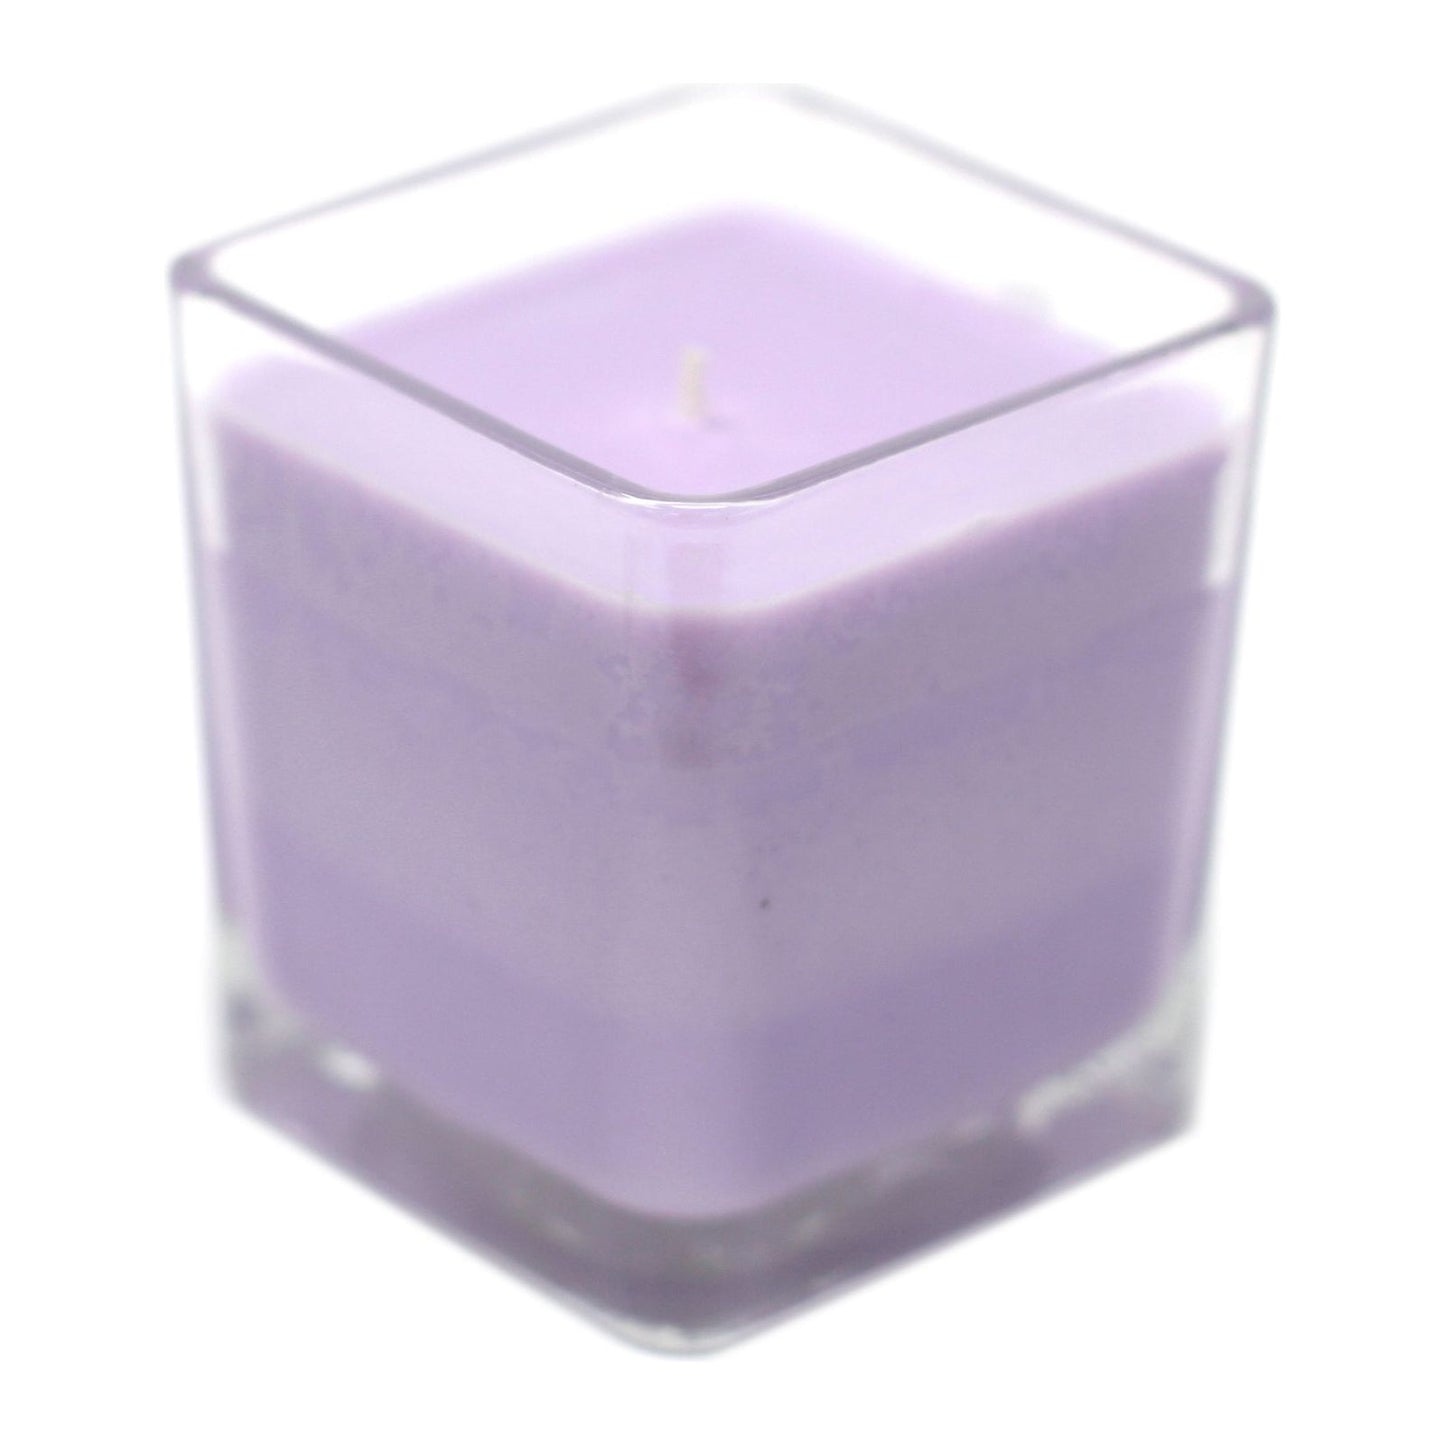 Soy Wax Jar Candle - Lavender & Basil - Ashton and Finch